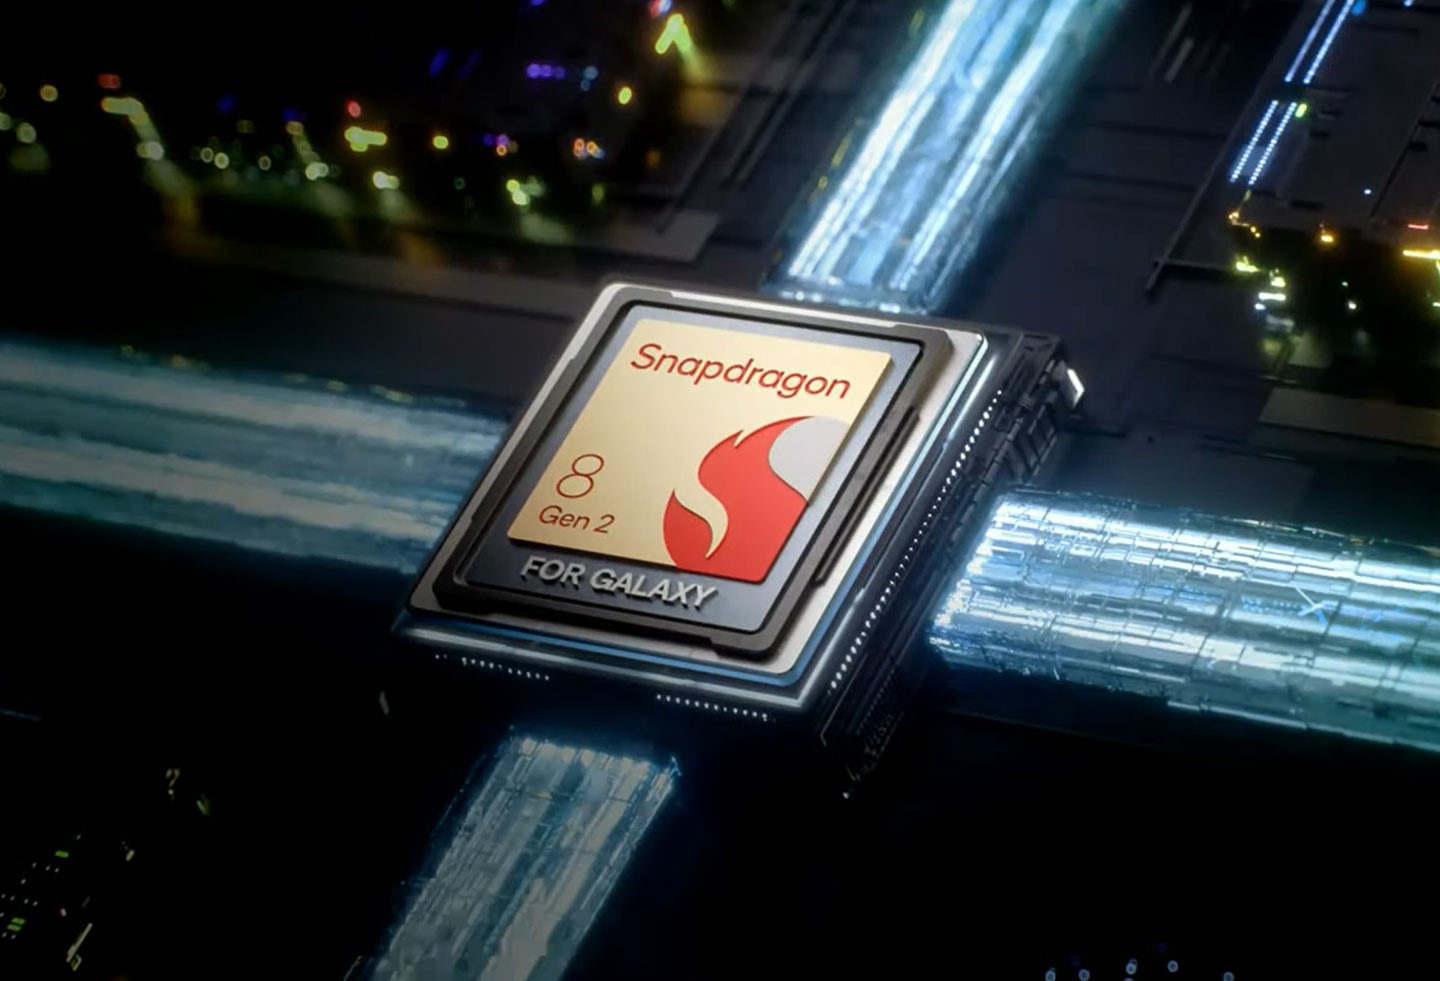 Galaxy S23 系列載了效能更優異的 Snapdragon 8 Gen 2 For Galaxy 處理器。